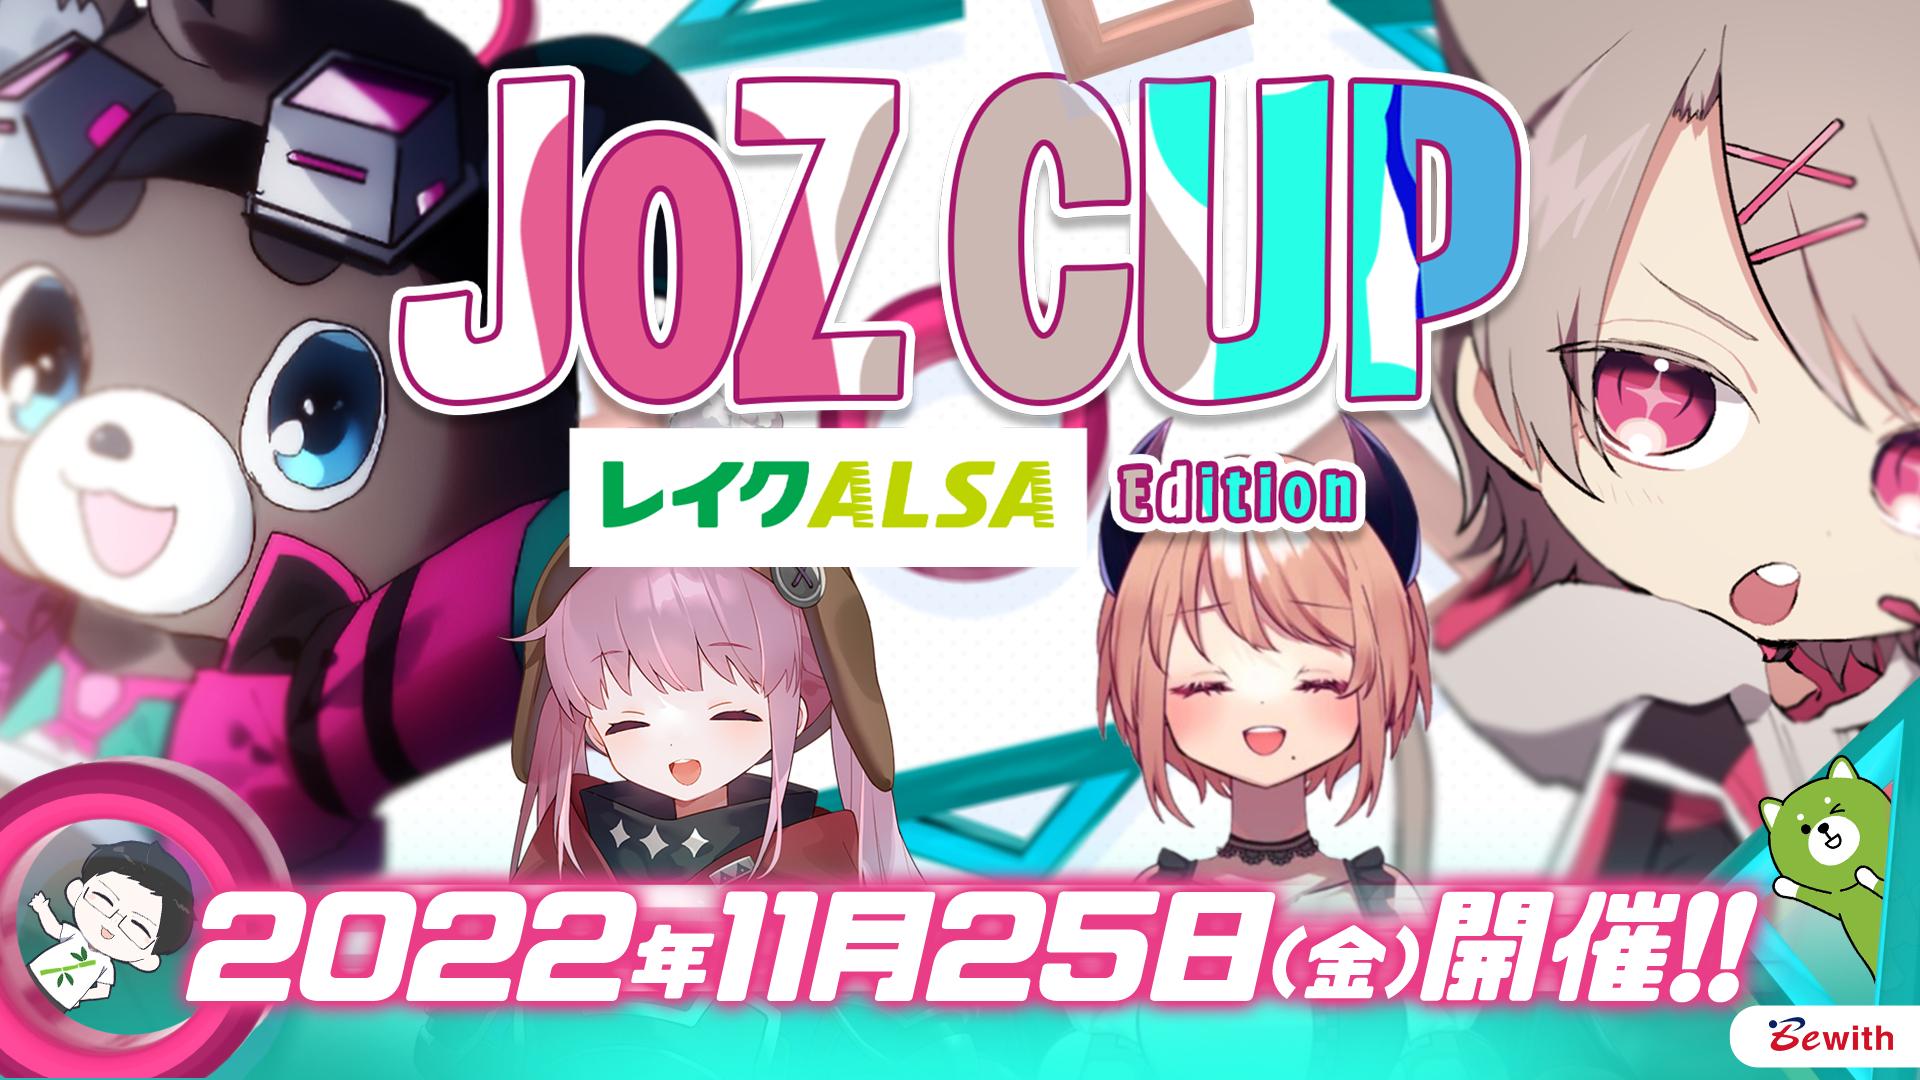 JOZ CUPの見出し画像